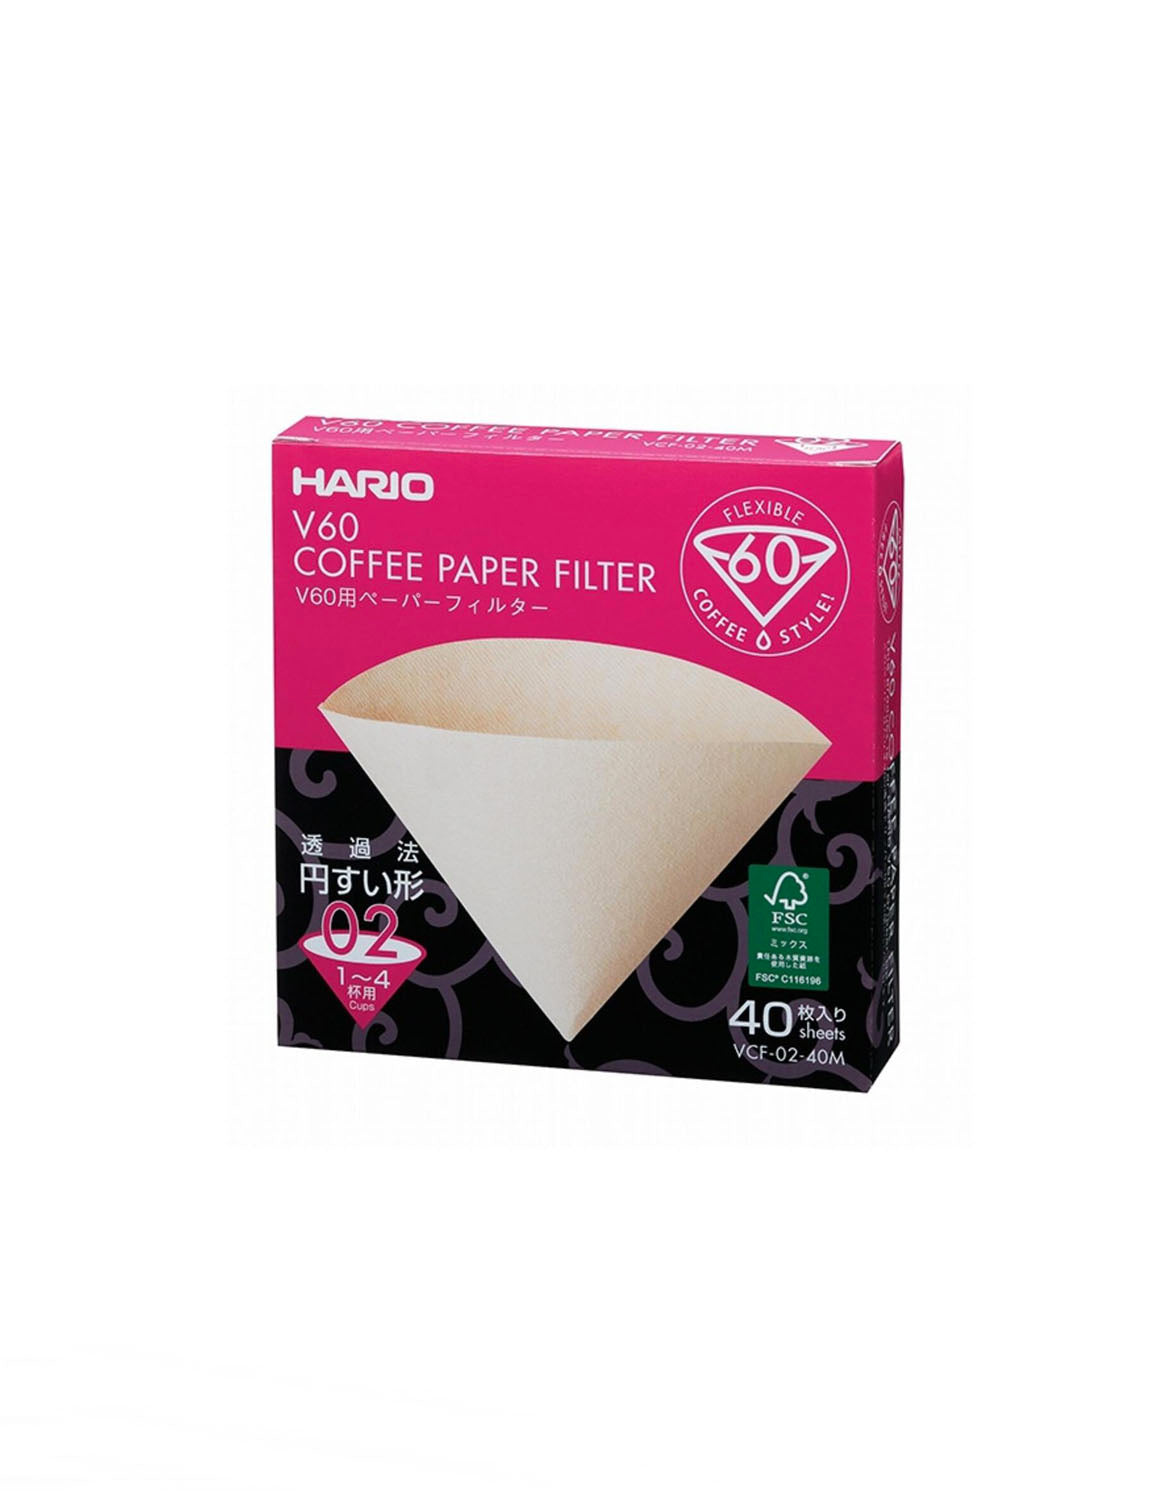 Hario V60 Coffee Paper Filter